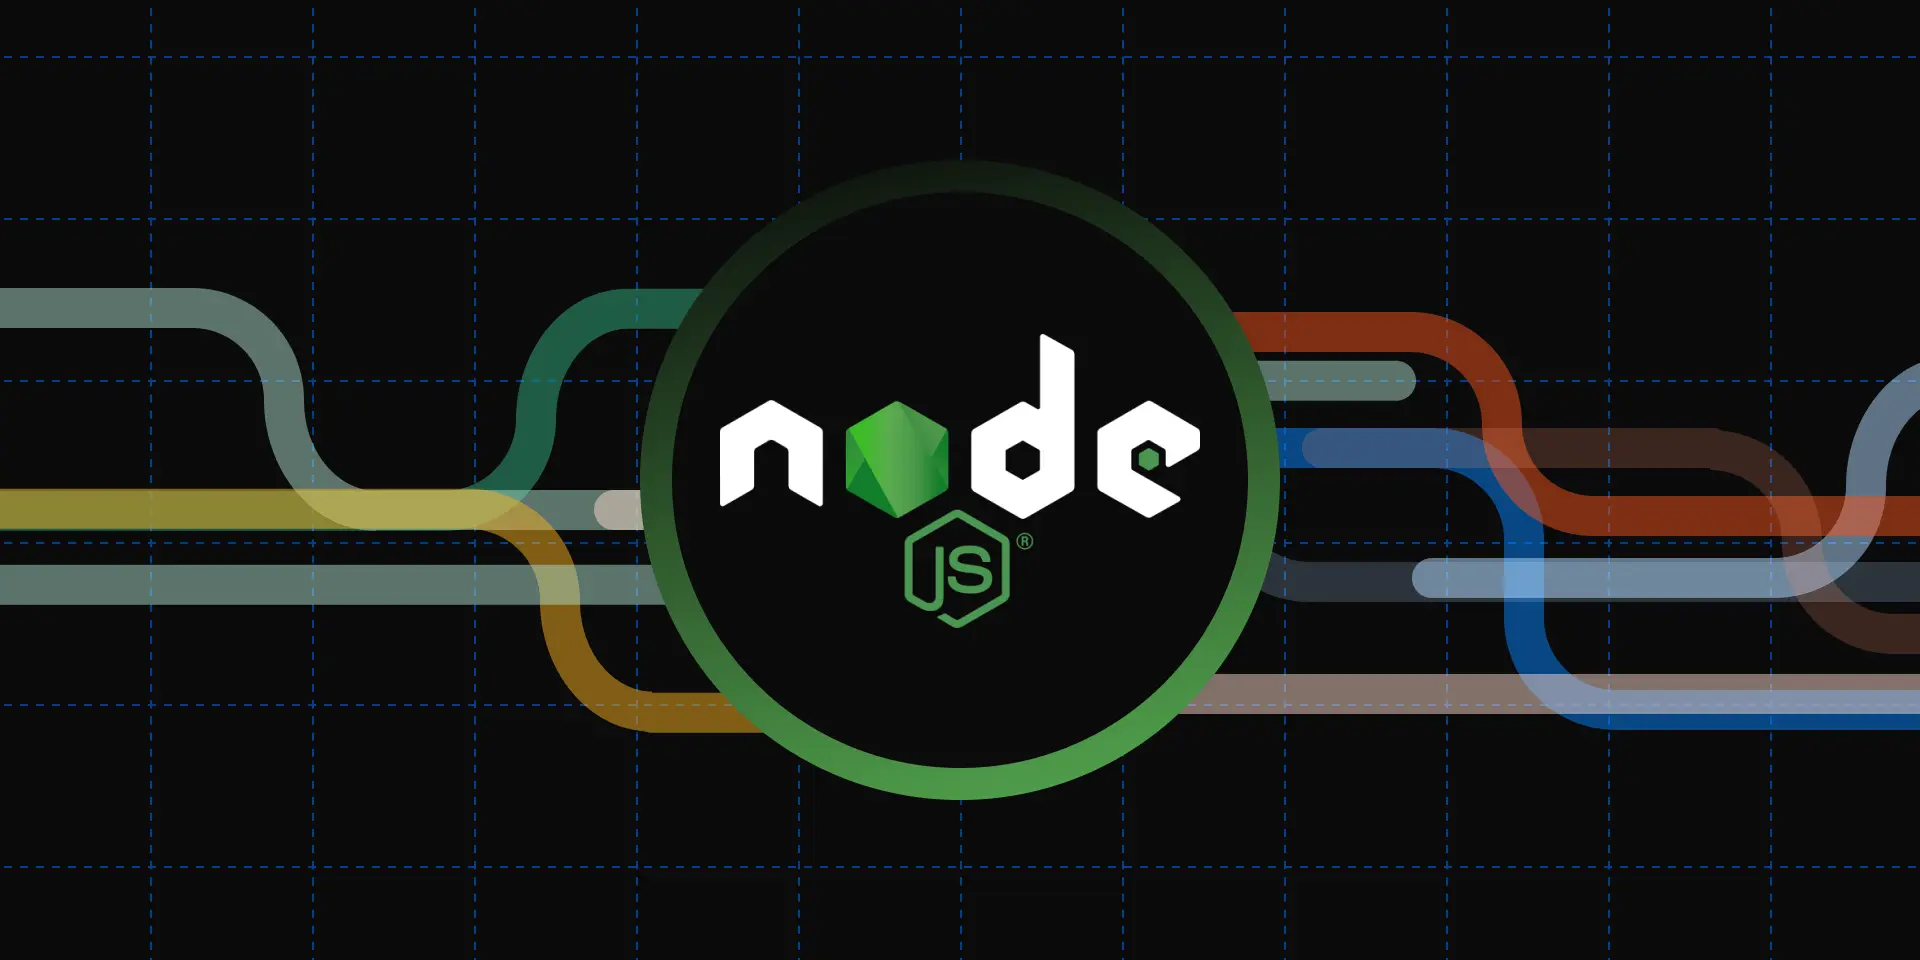 Building a simple server with Node.js